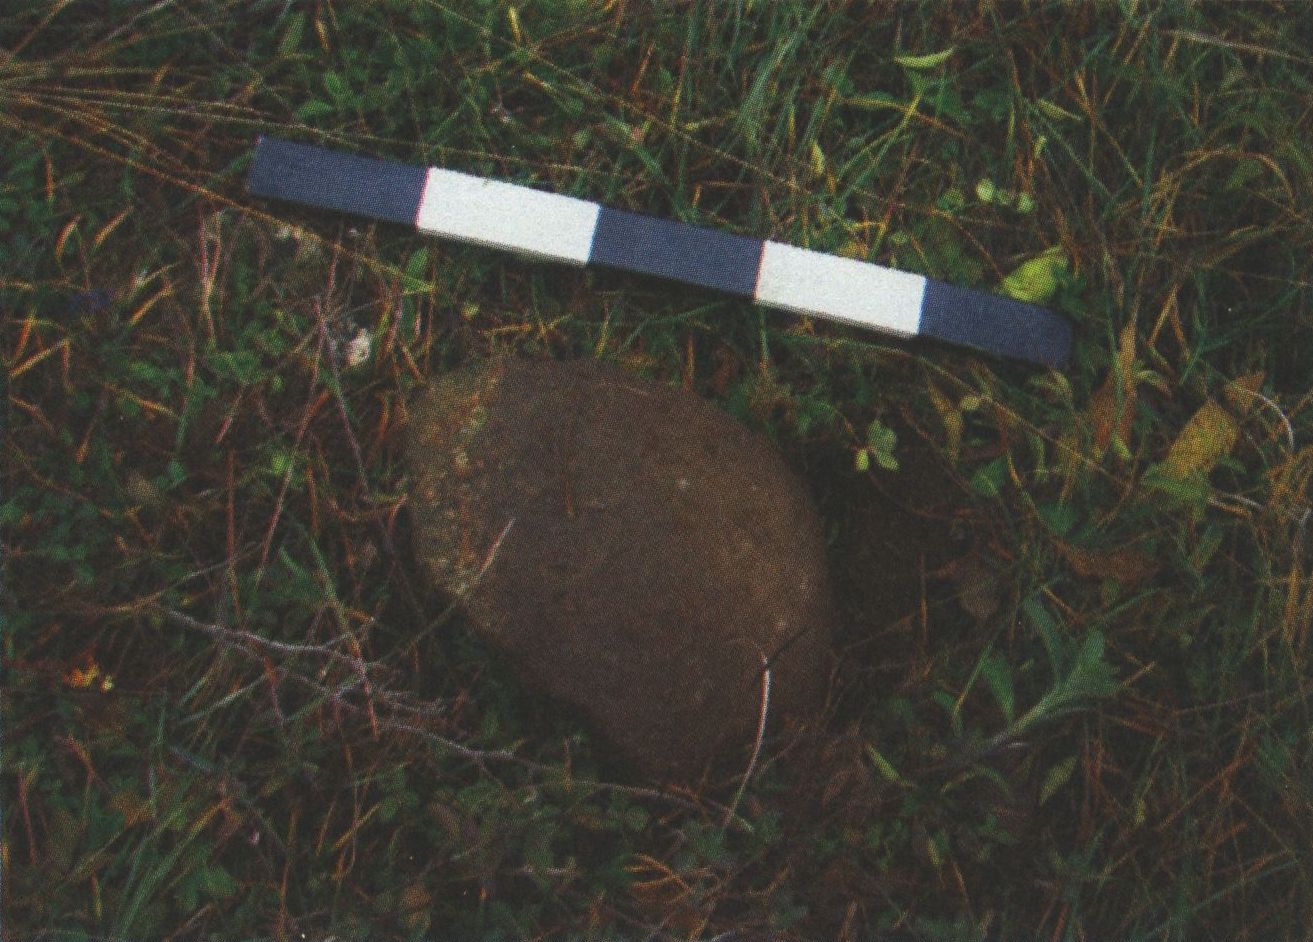 Фрагмент пушечного ядра с южного склона Мангупа. Находка 2010 г.